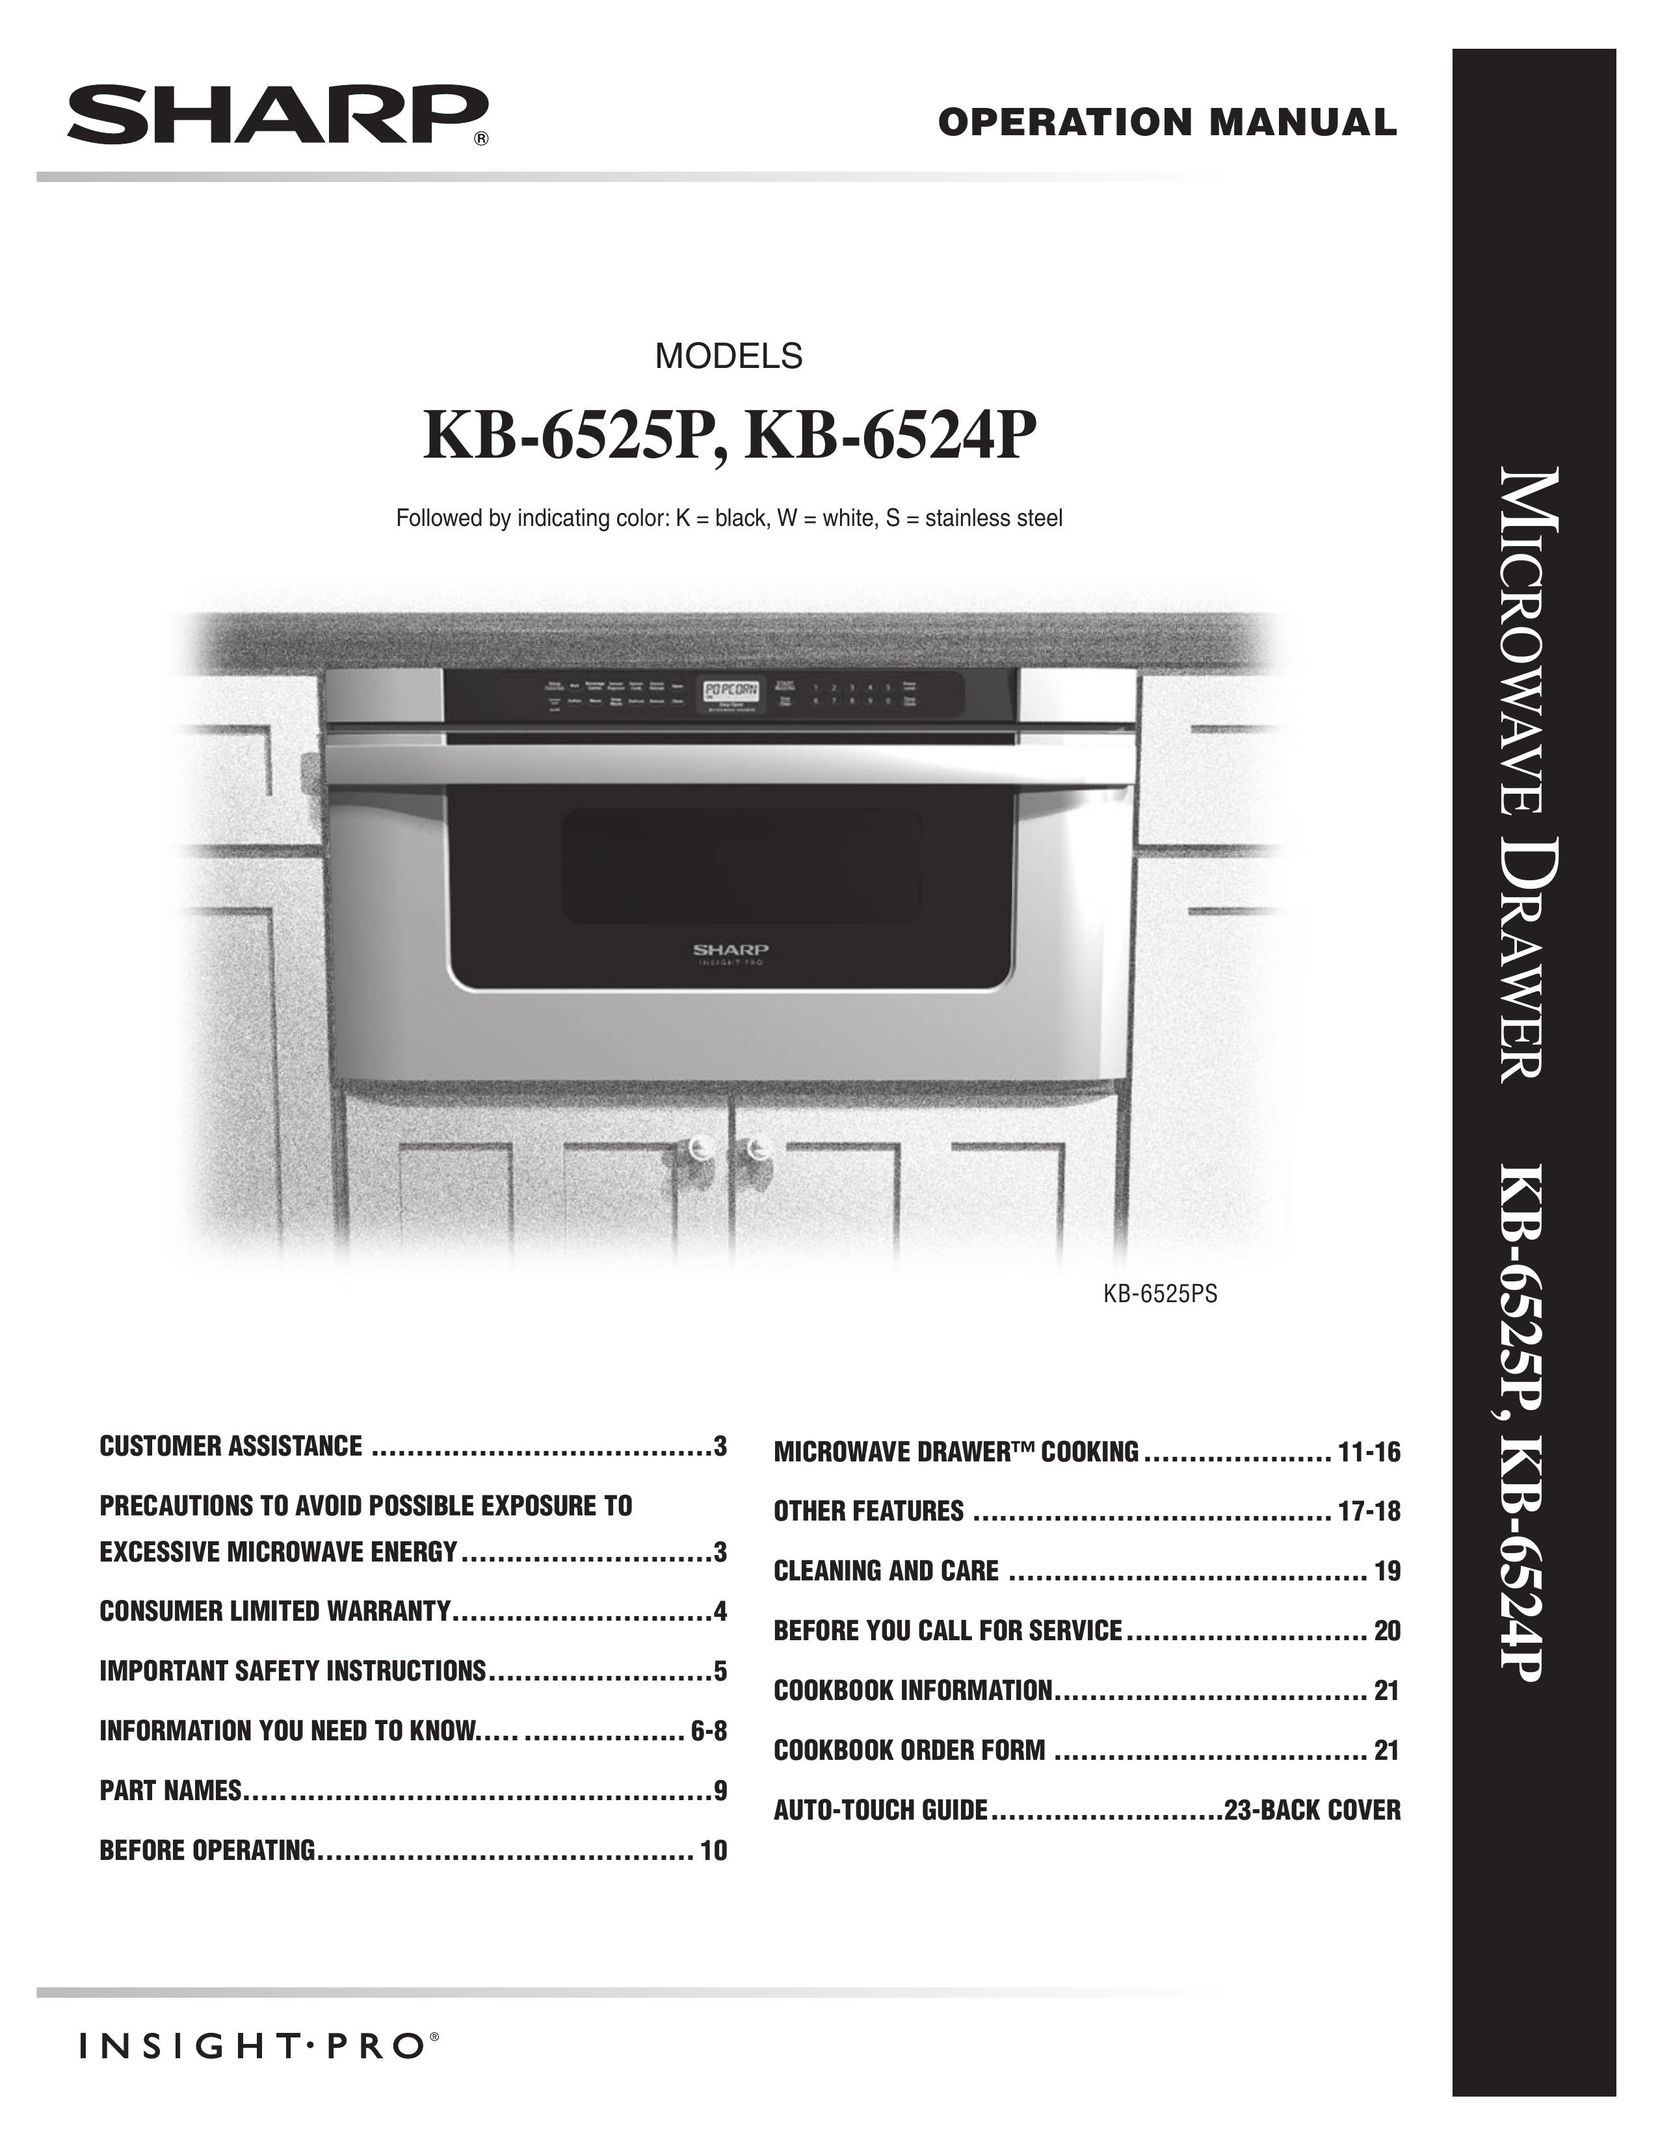 Sharp KB6525PKRB Convection Oven User Manual